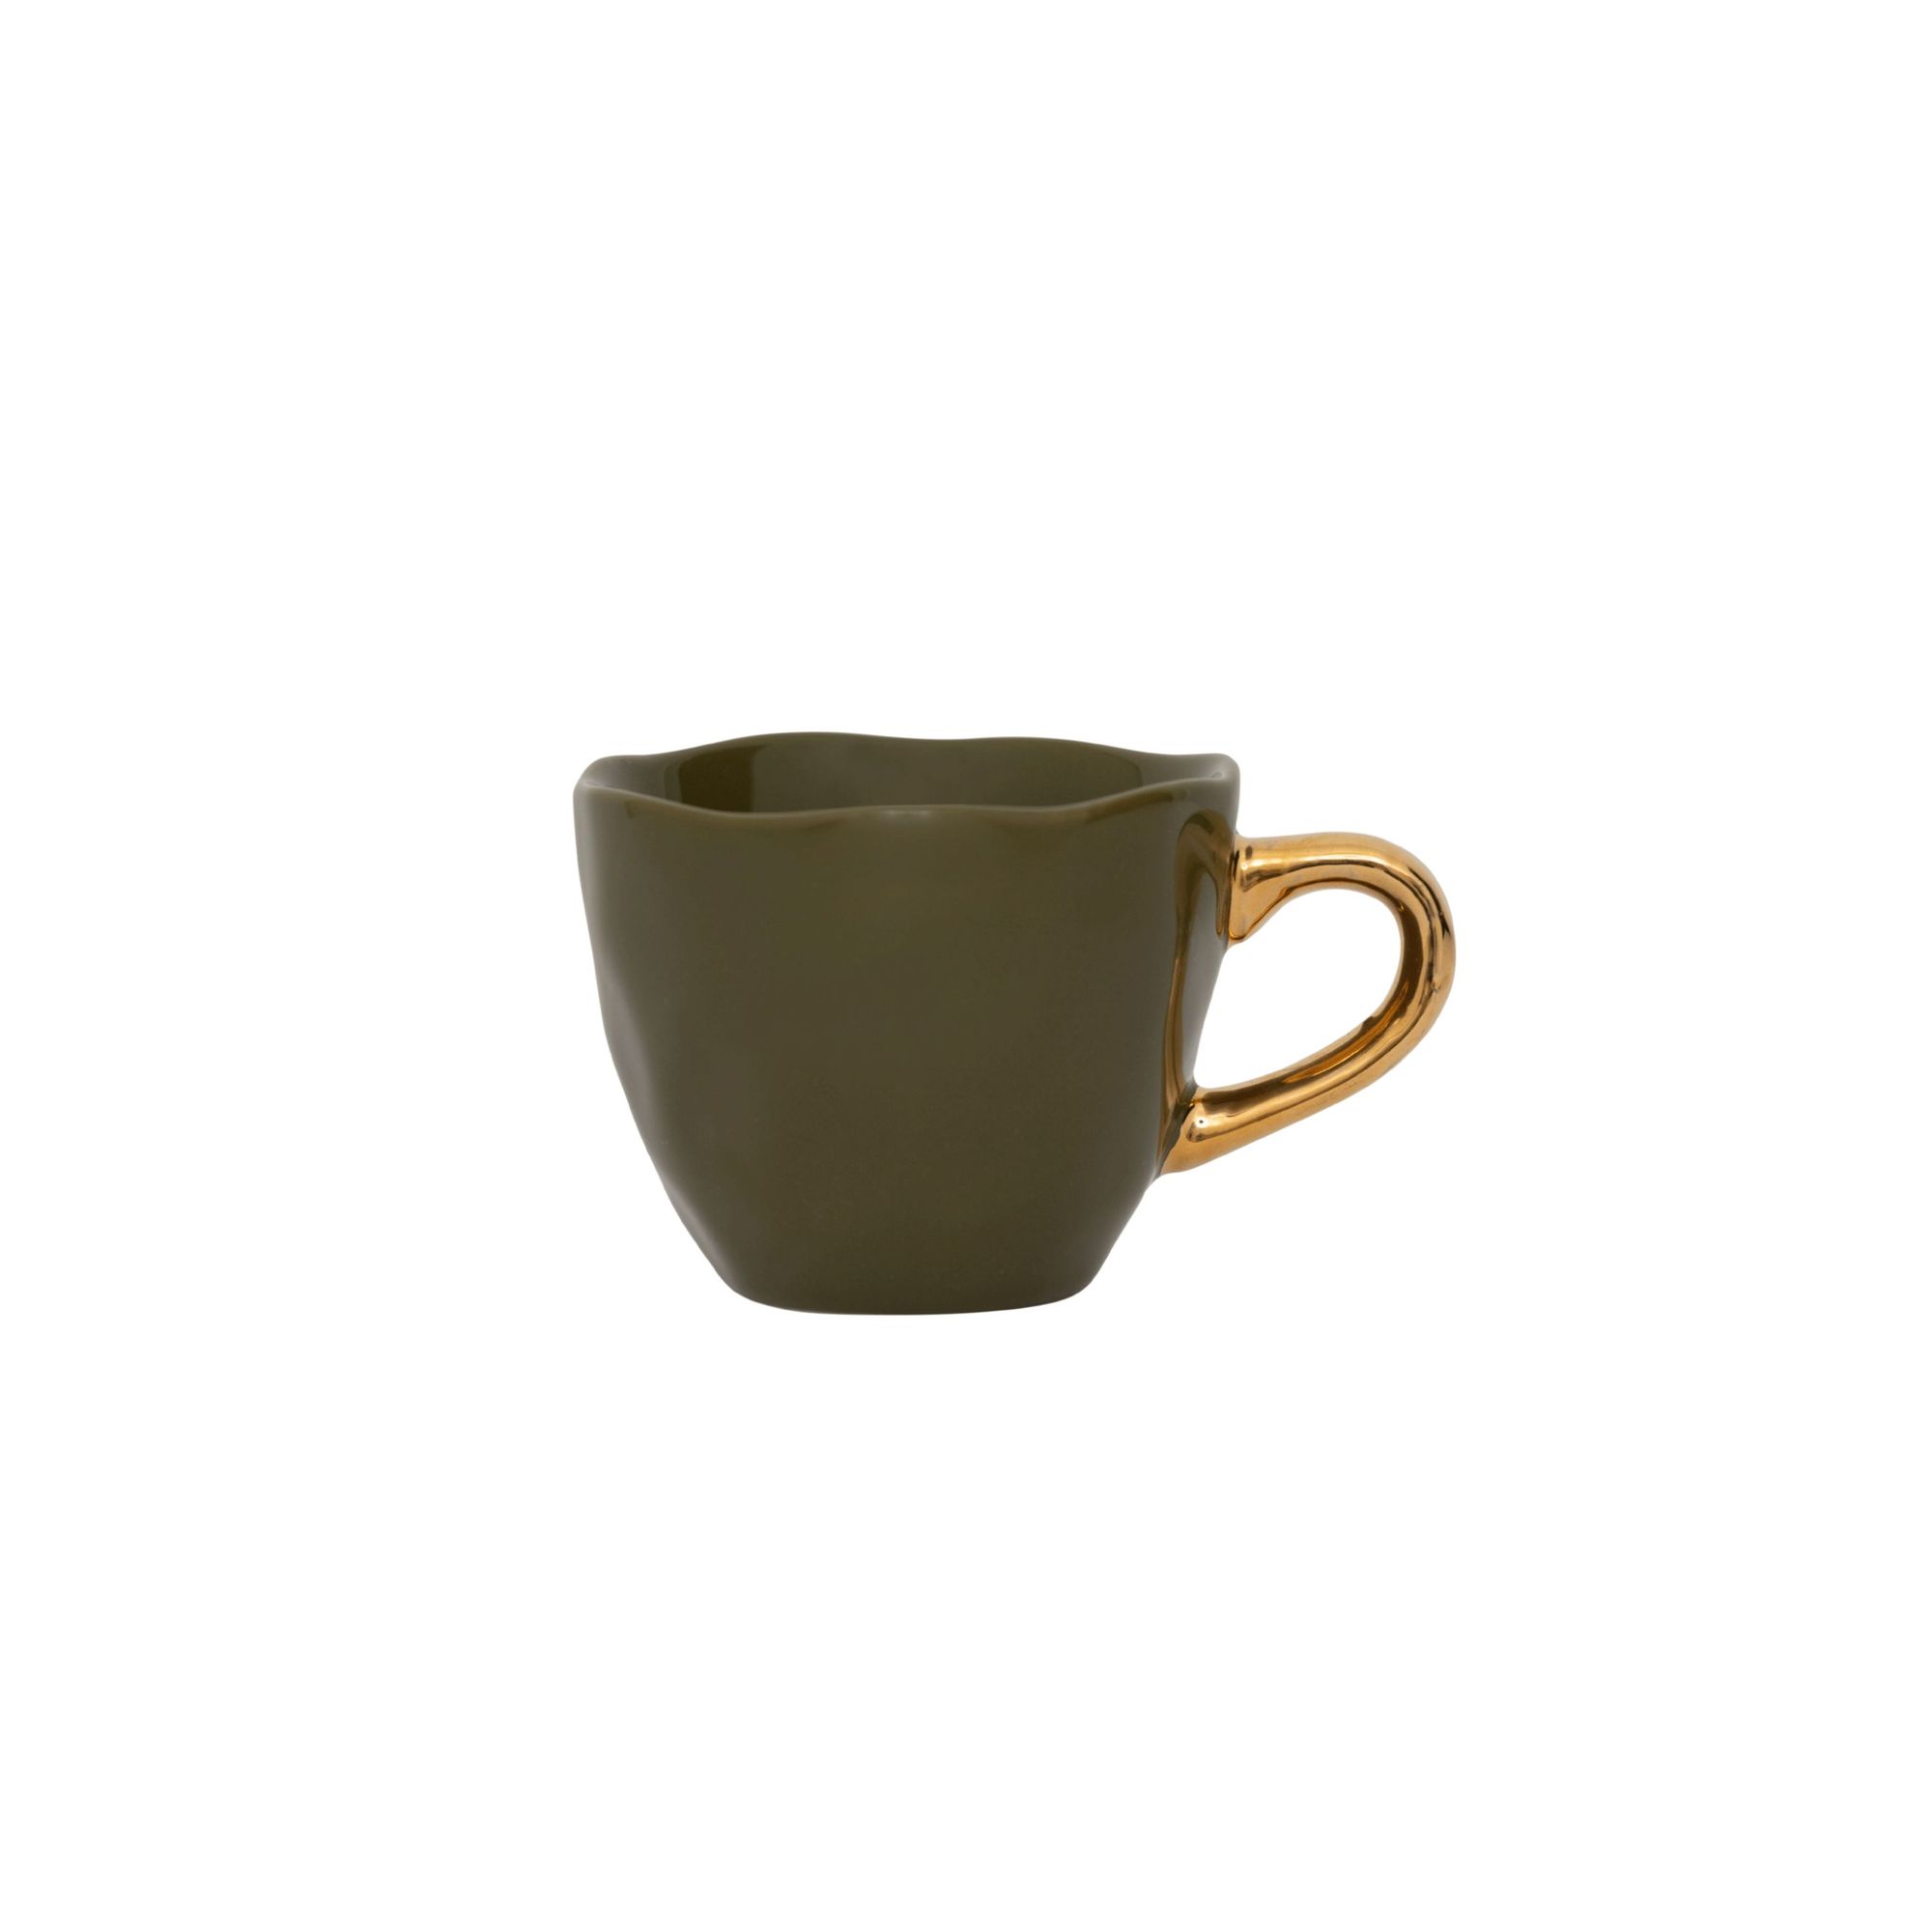 Unc Good Morning Cup Espresso Fir Green Gift